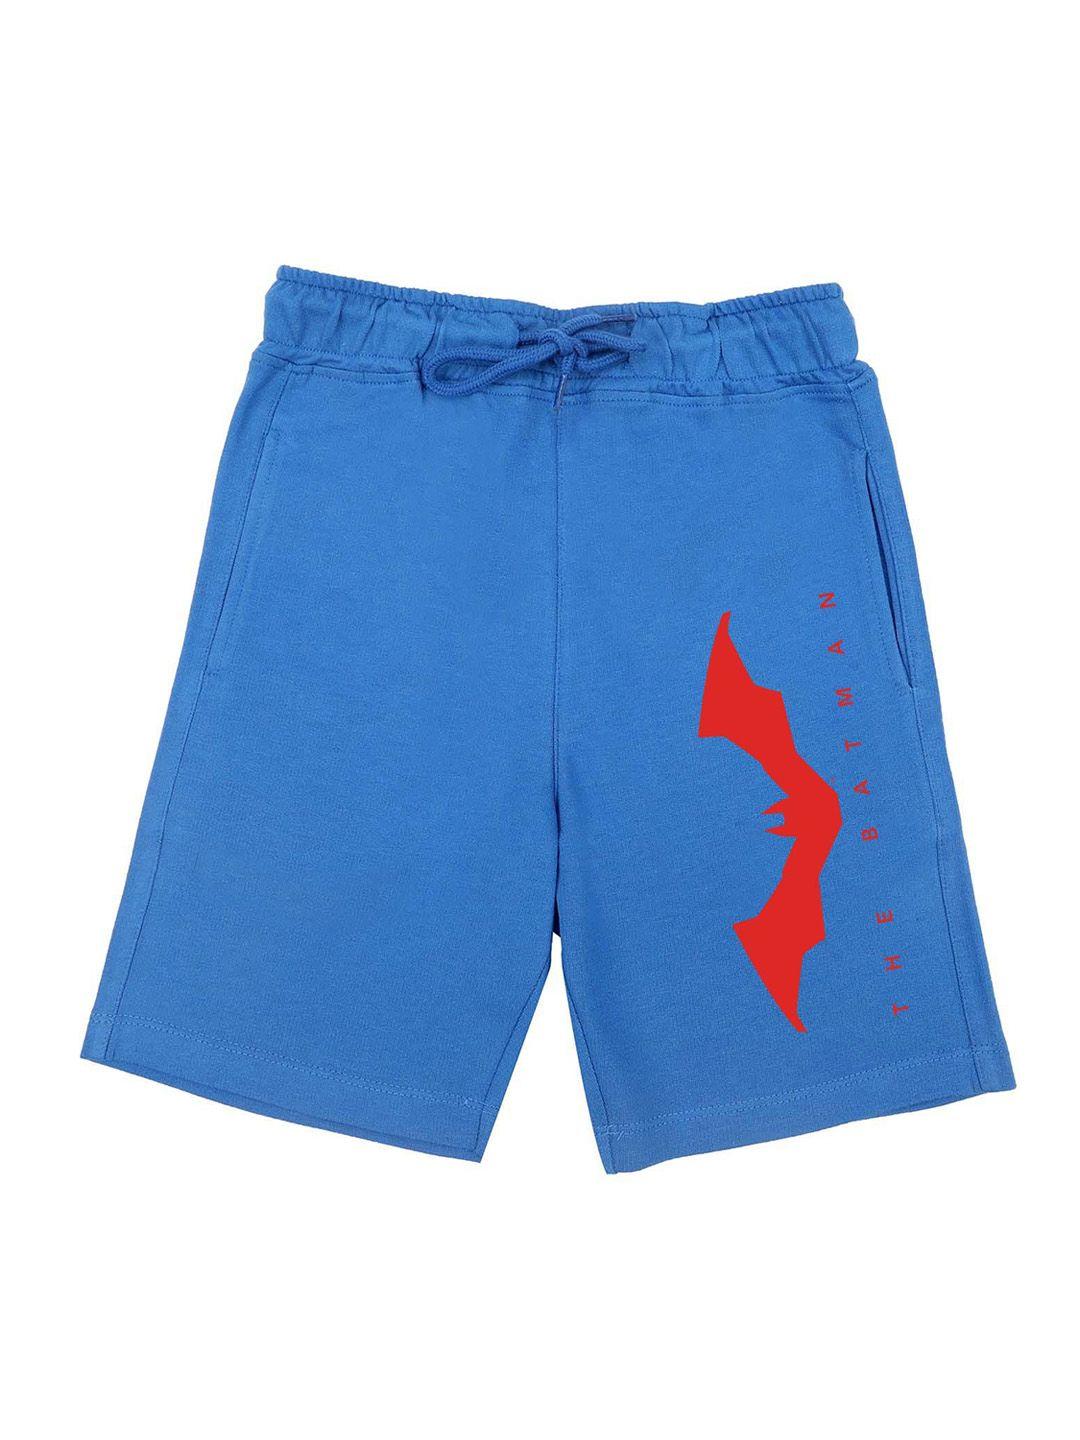 dc-by-wear-your-mind-boys-blue-printed-batman-shorts